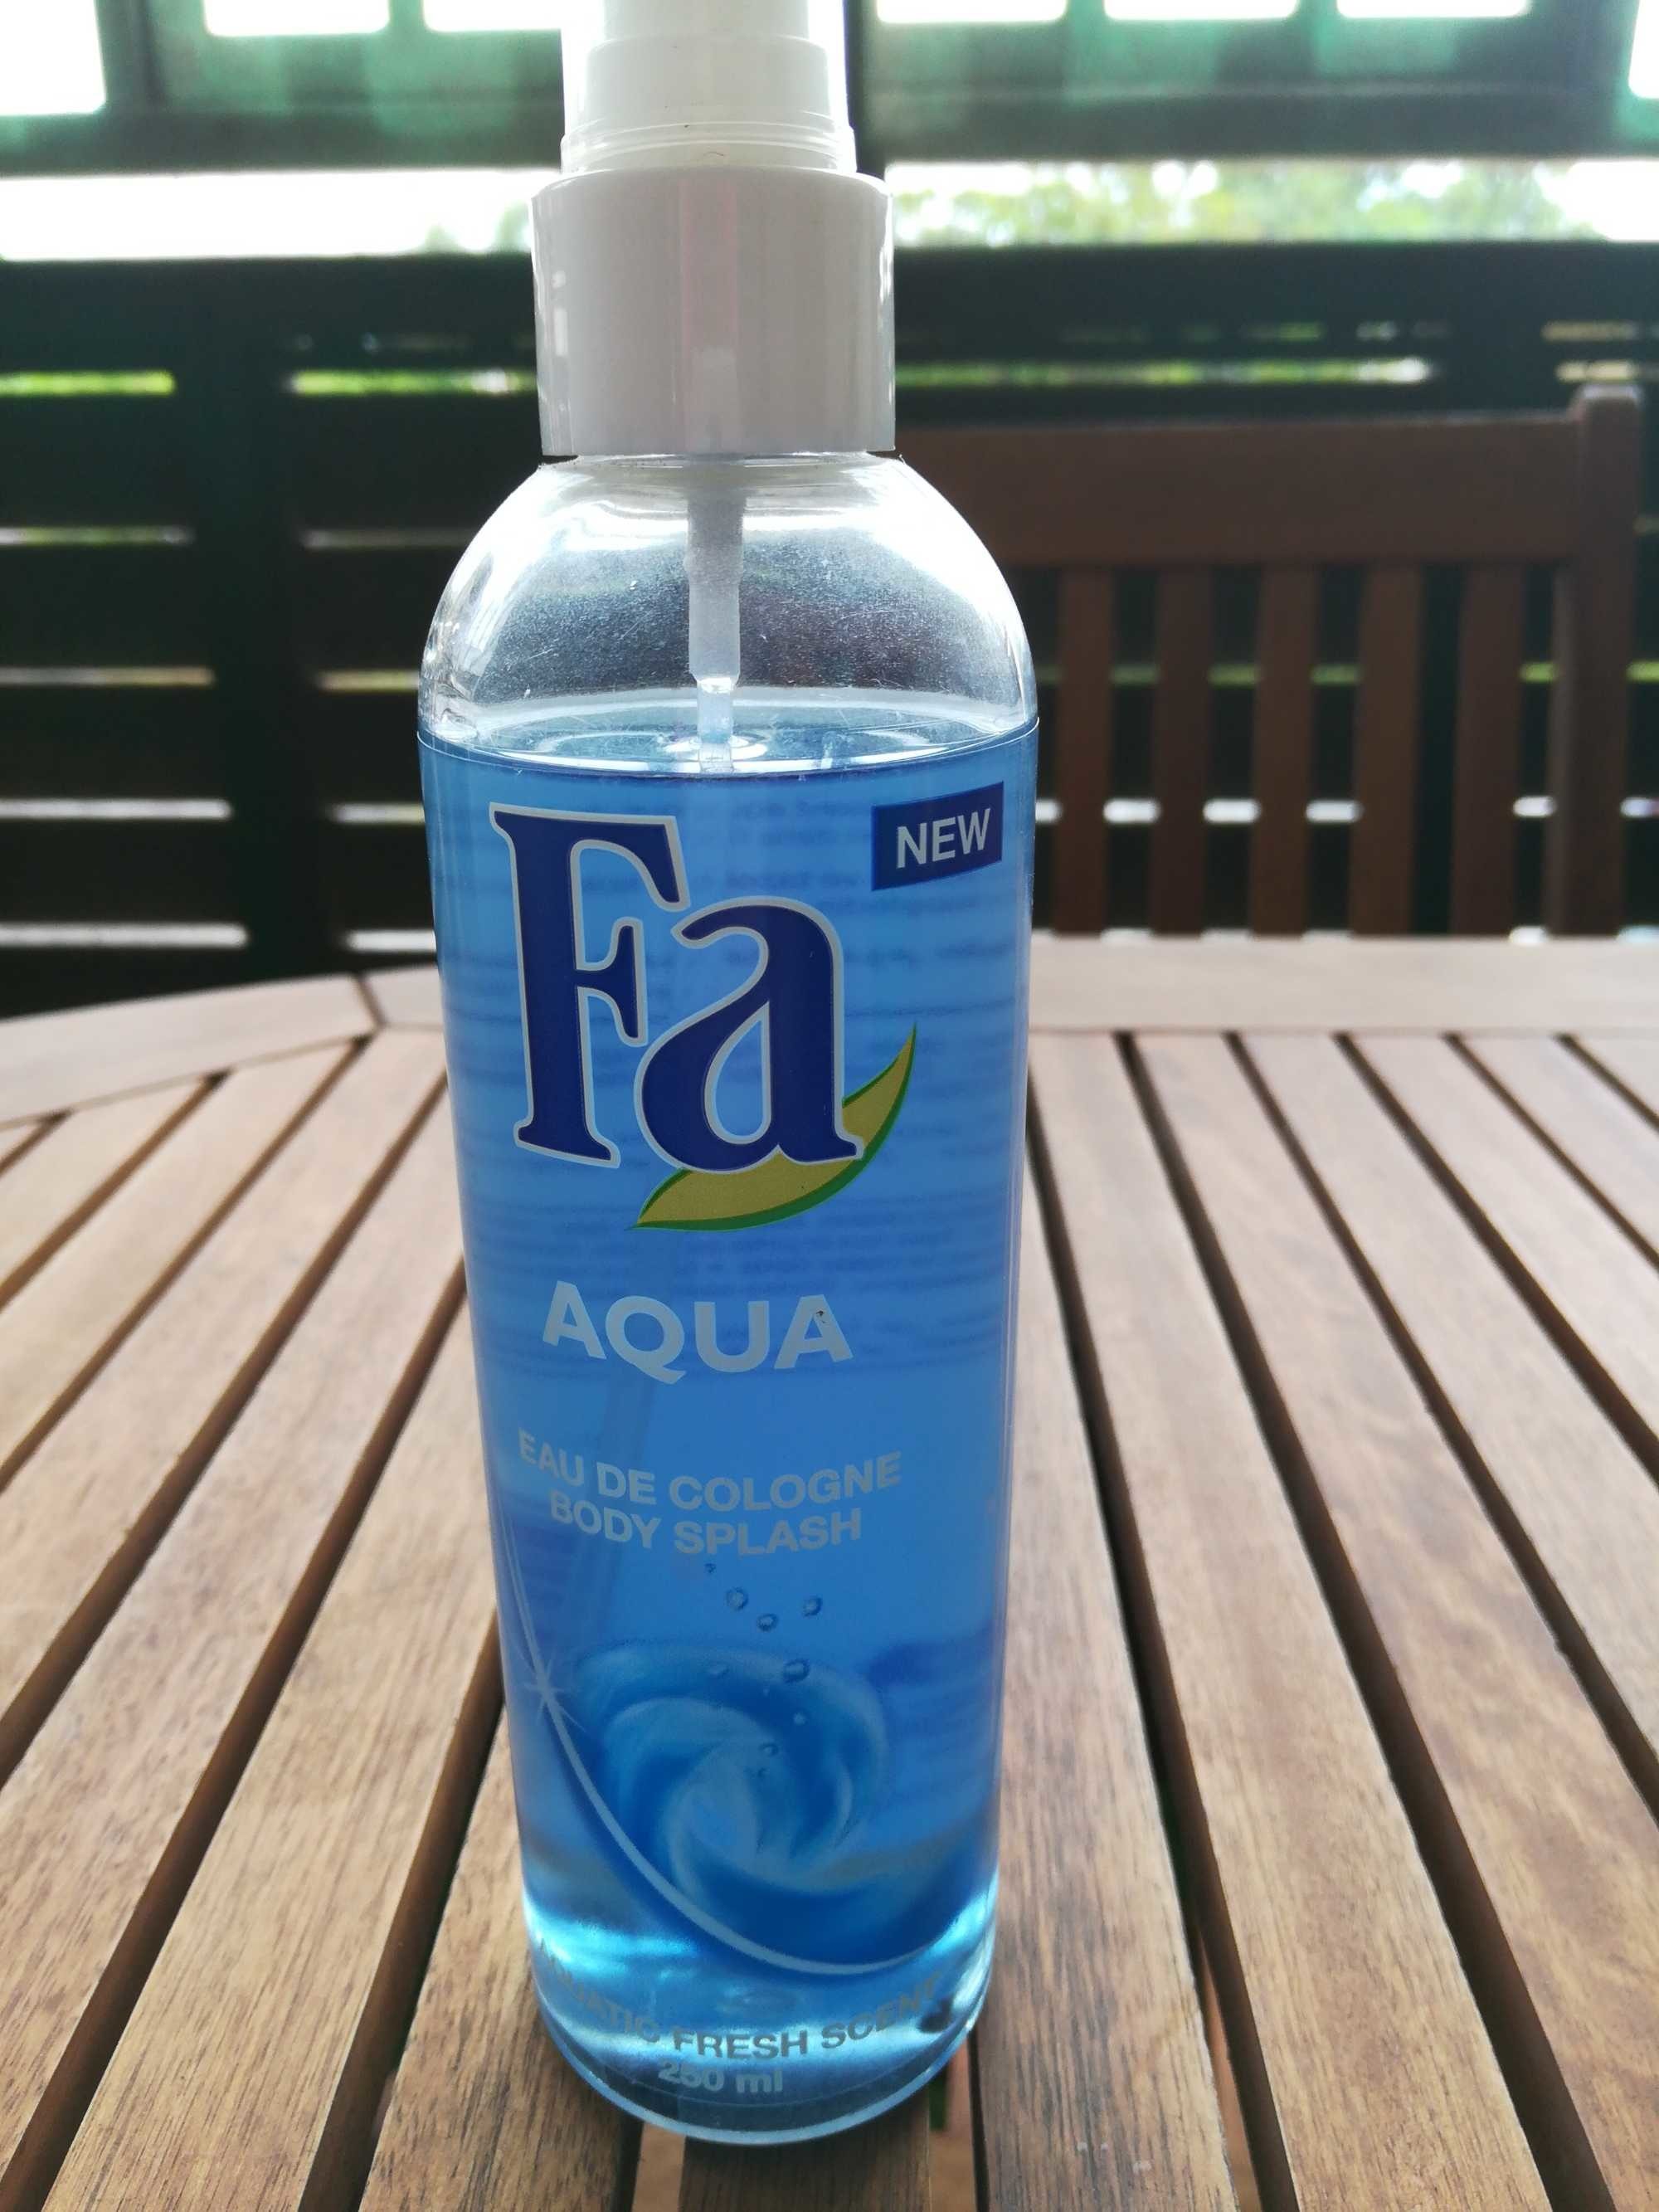 Aqua eau de cologne - Produto - fr